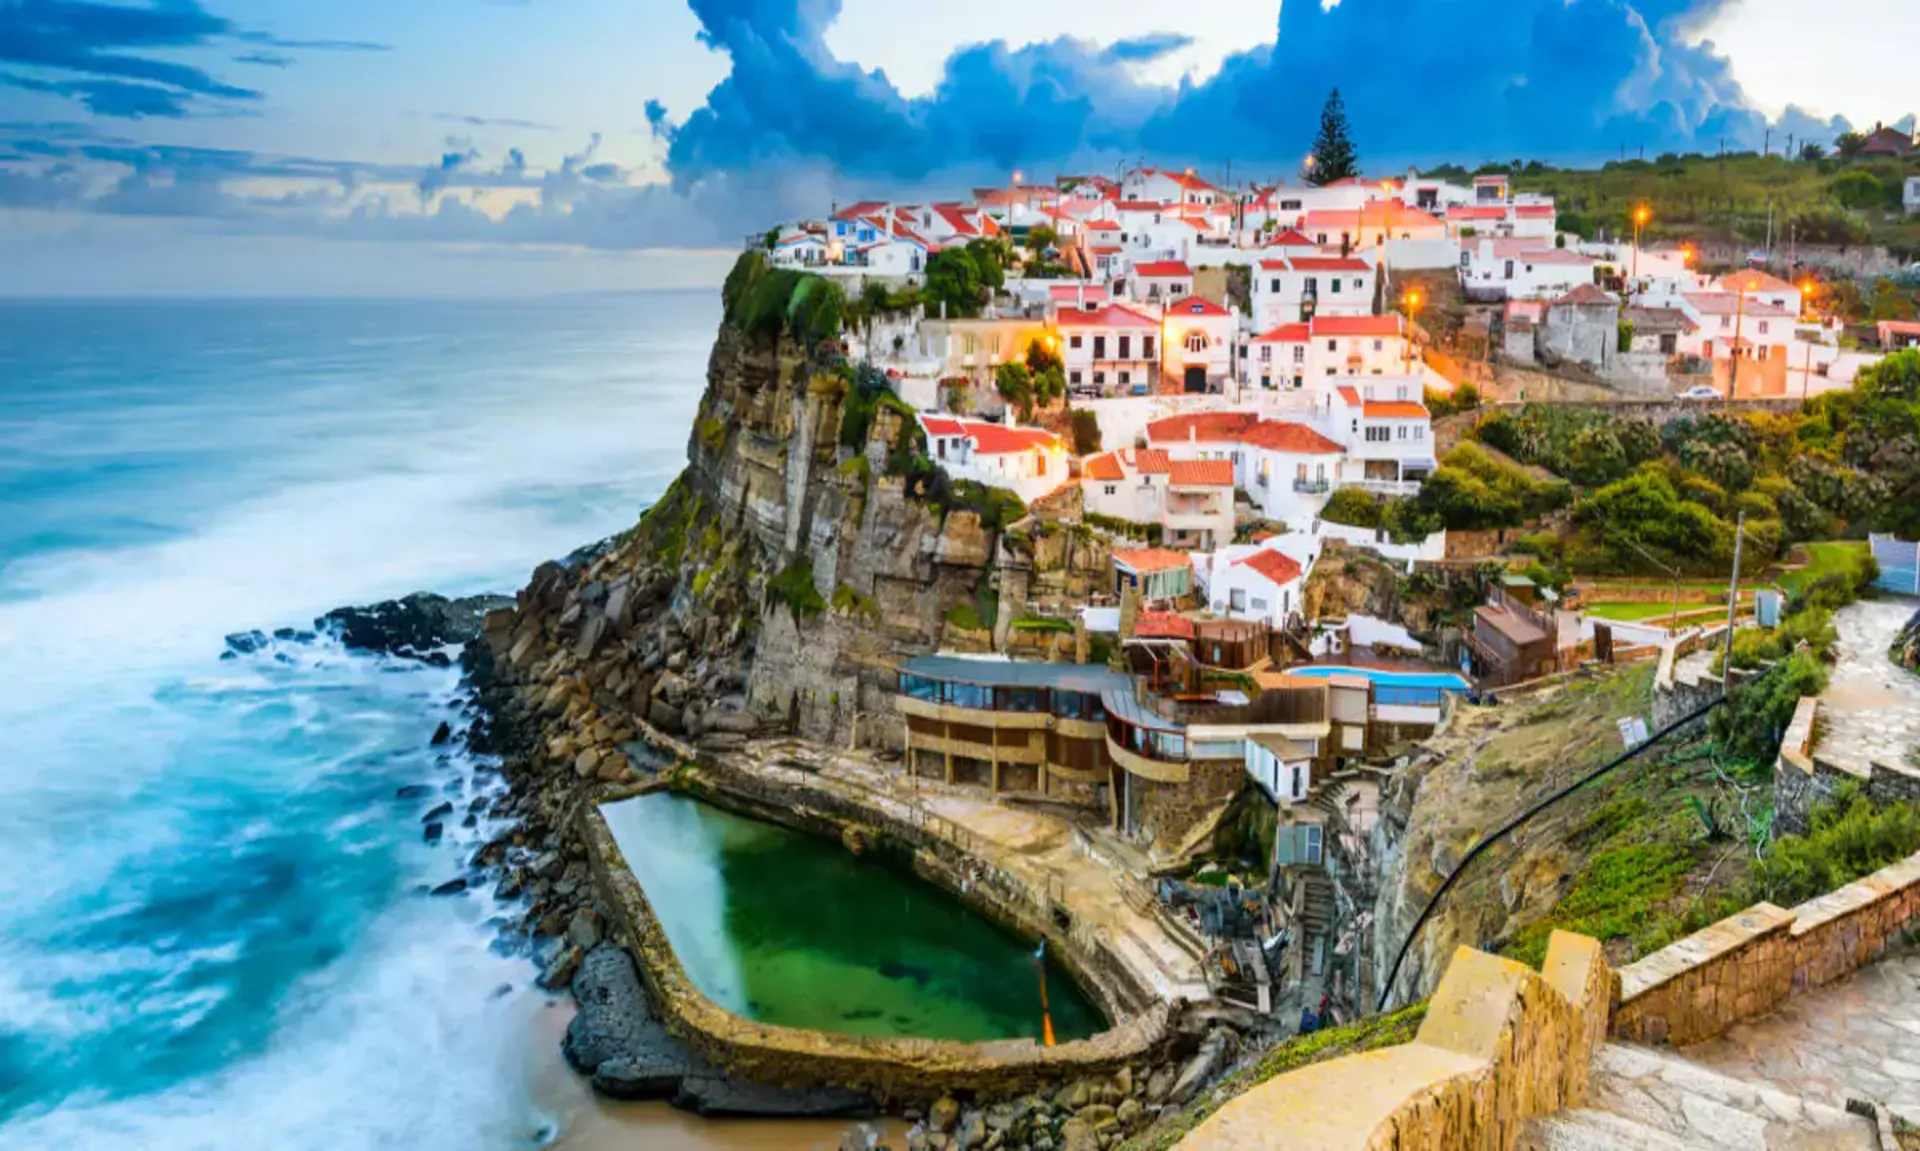 Exploring Portugal’s most remote corners